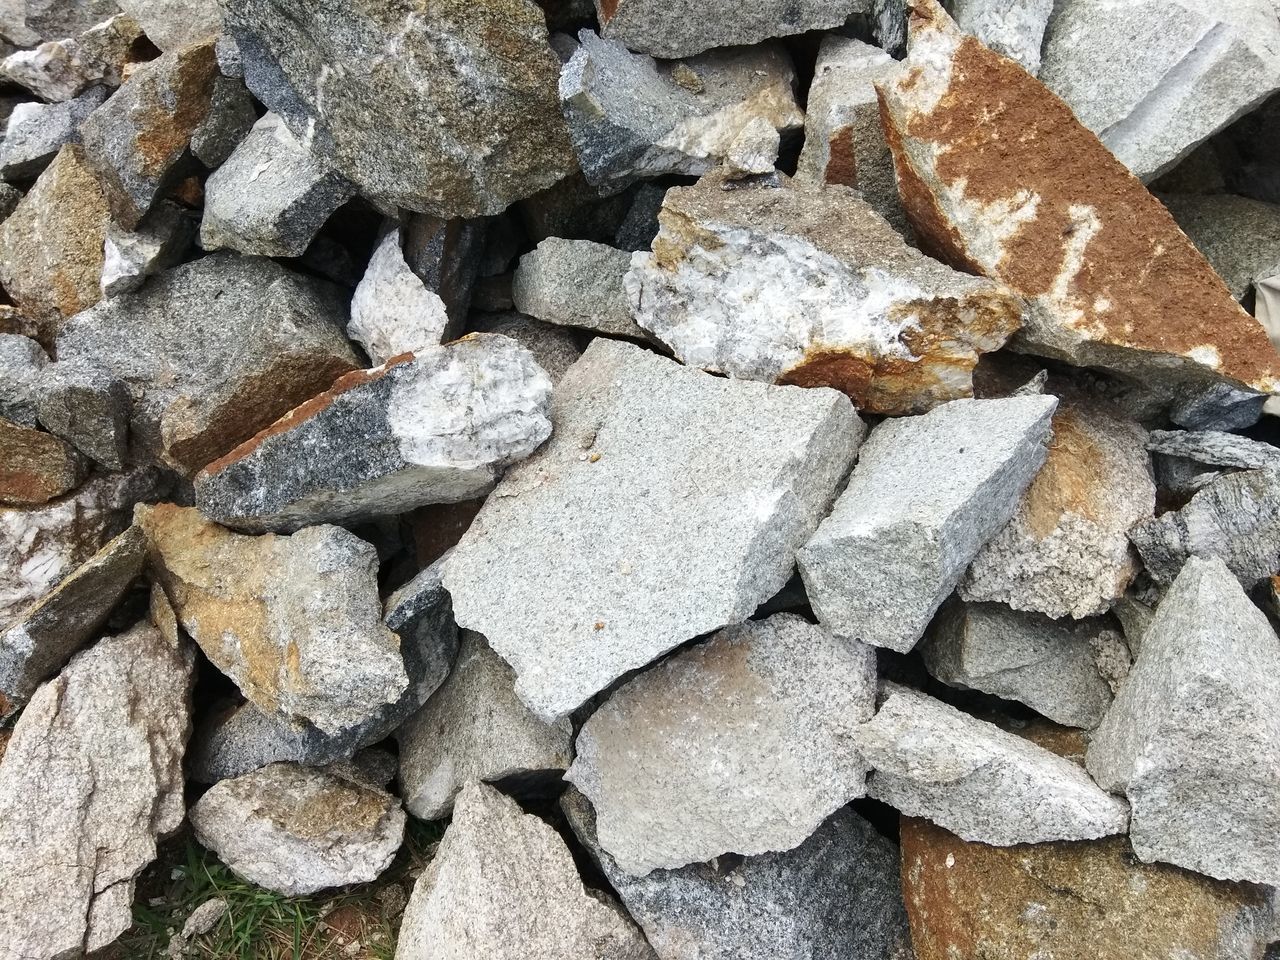 CLOSE-UP OF ROCKS